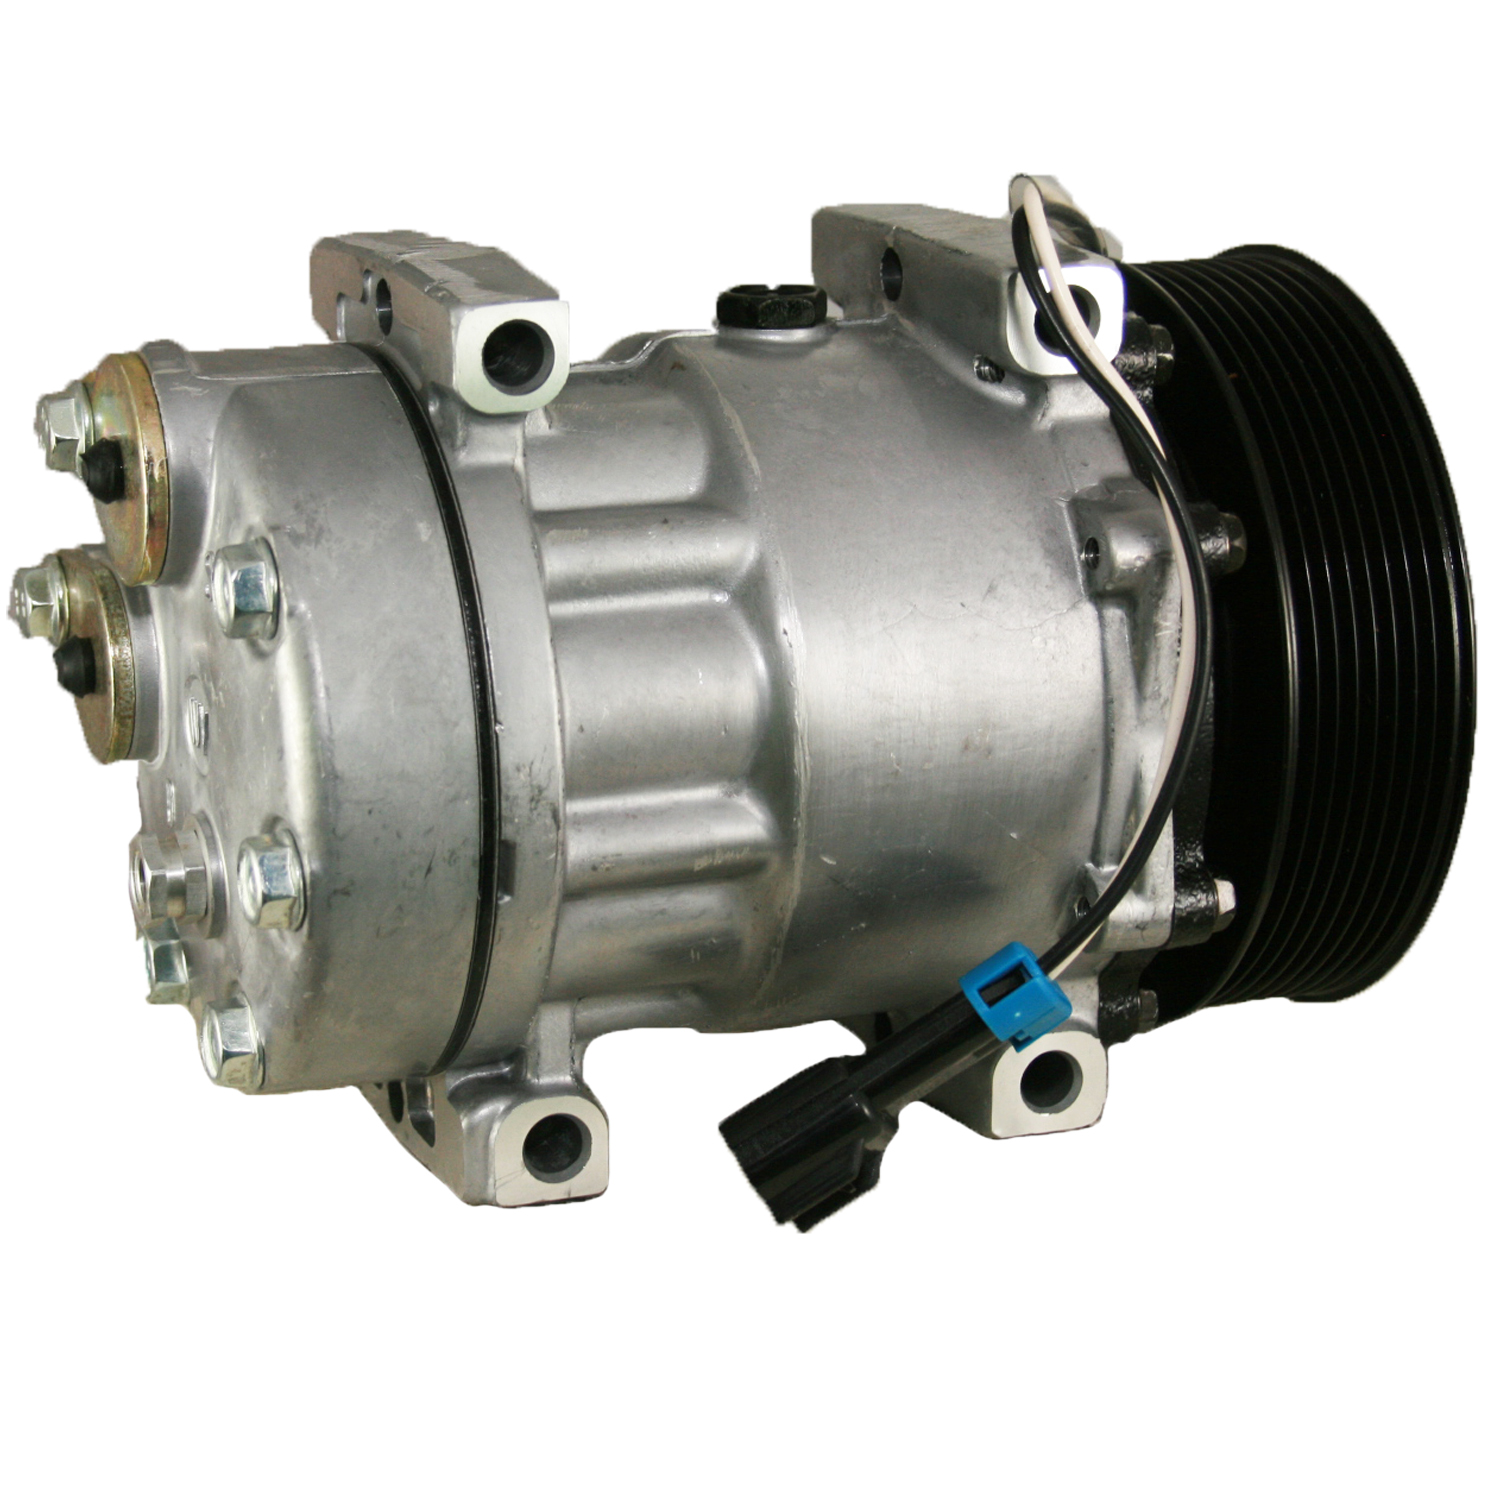 TCW Compressor 40585.801NEW New Product Image field_60b6a13a6e67c